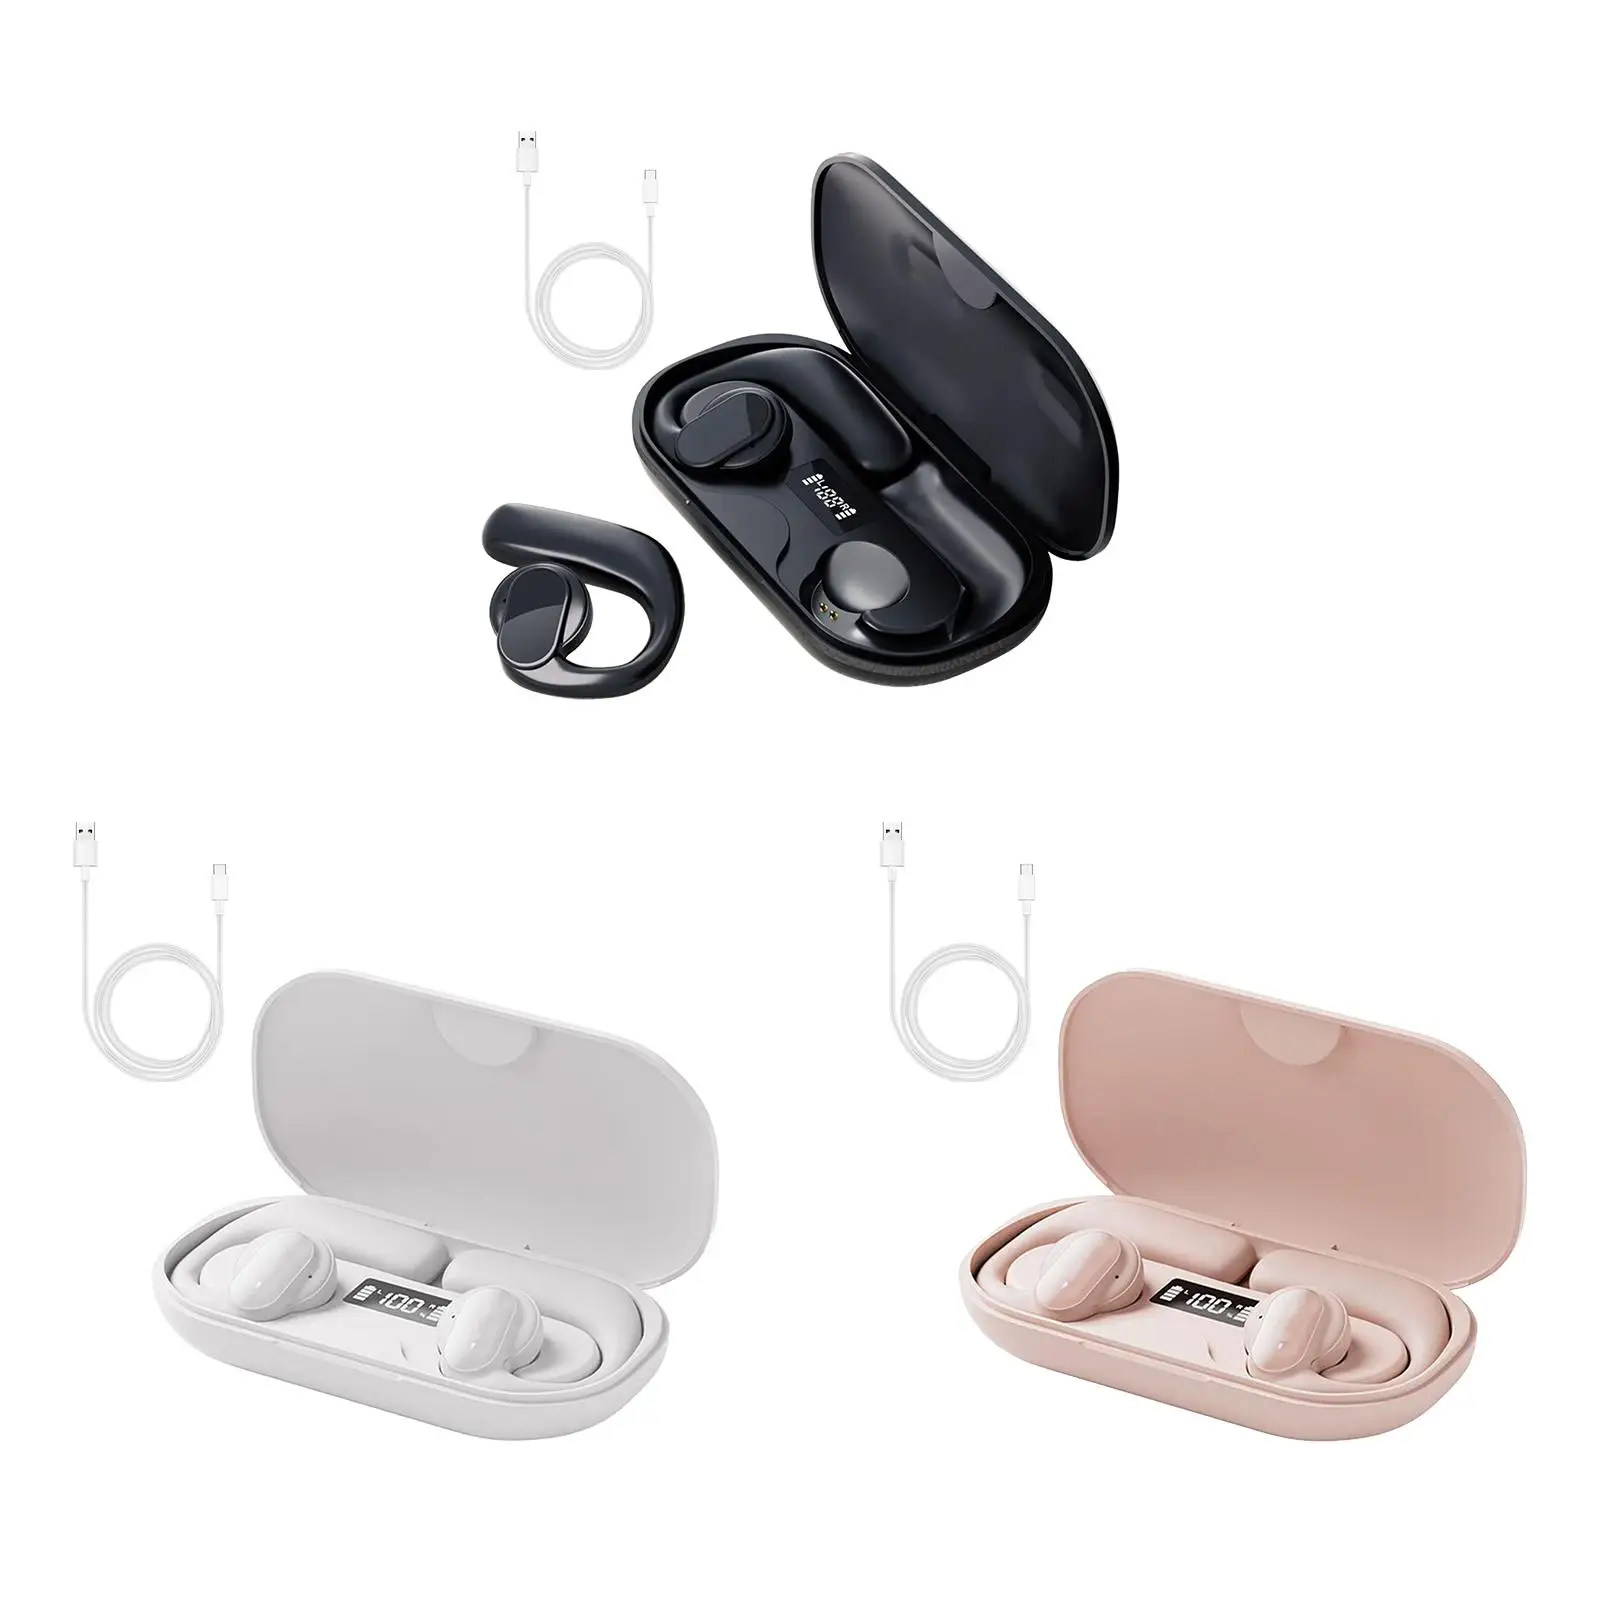 Bluetooth Headphones Stereo IPX6 Waterproof HiFi Ergonomic Ear Hooks Earphones for Sports Gaming All Smart Phones Laptop Working